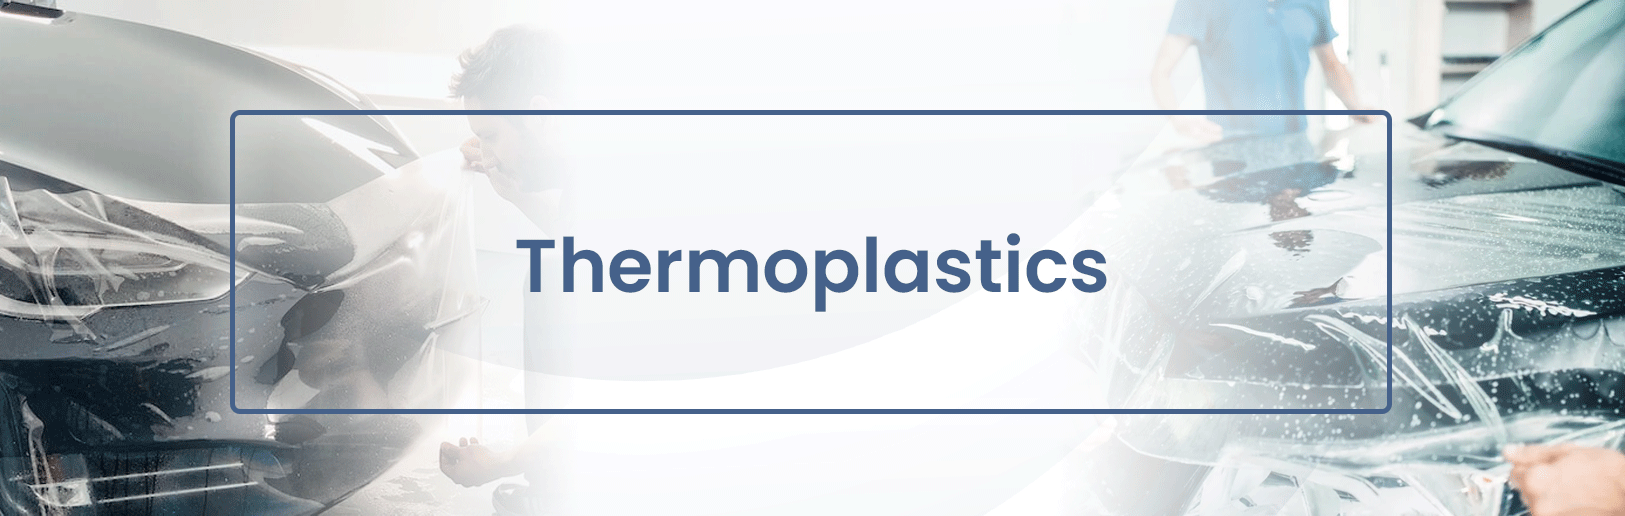 Thermoplastics﻿